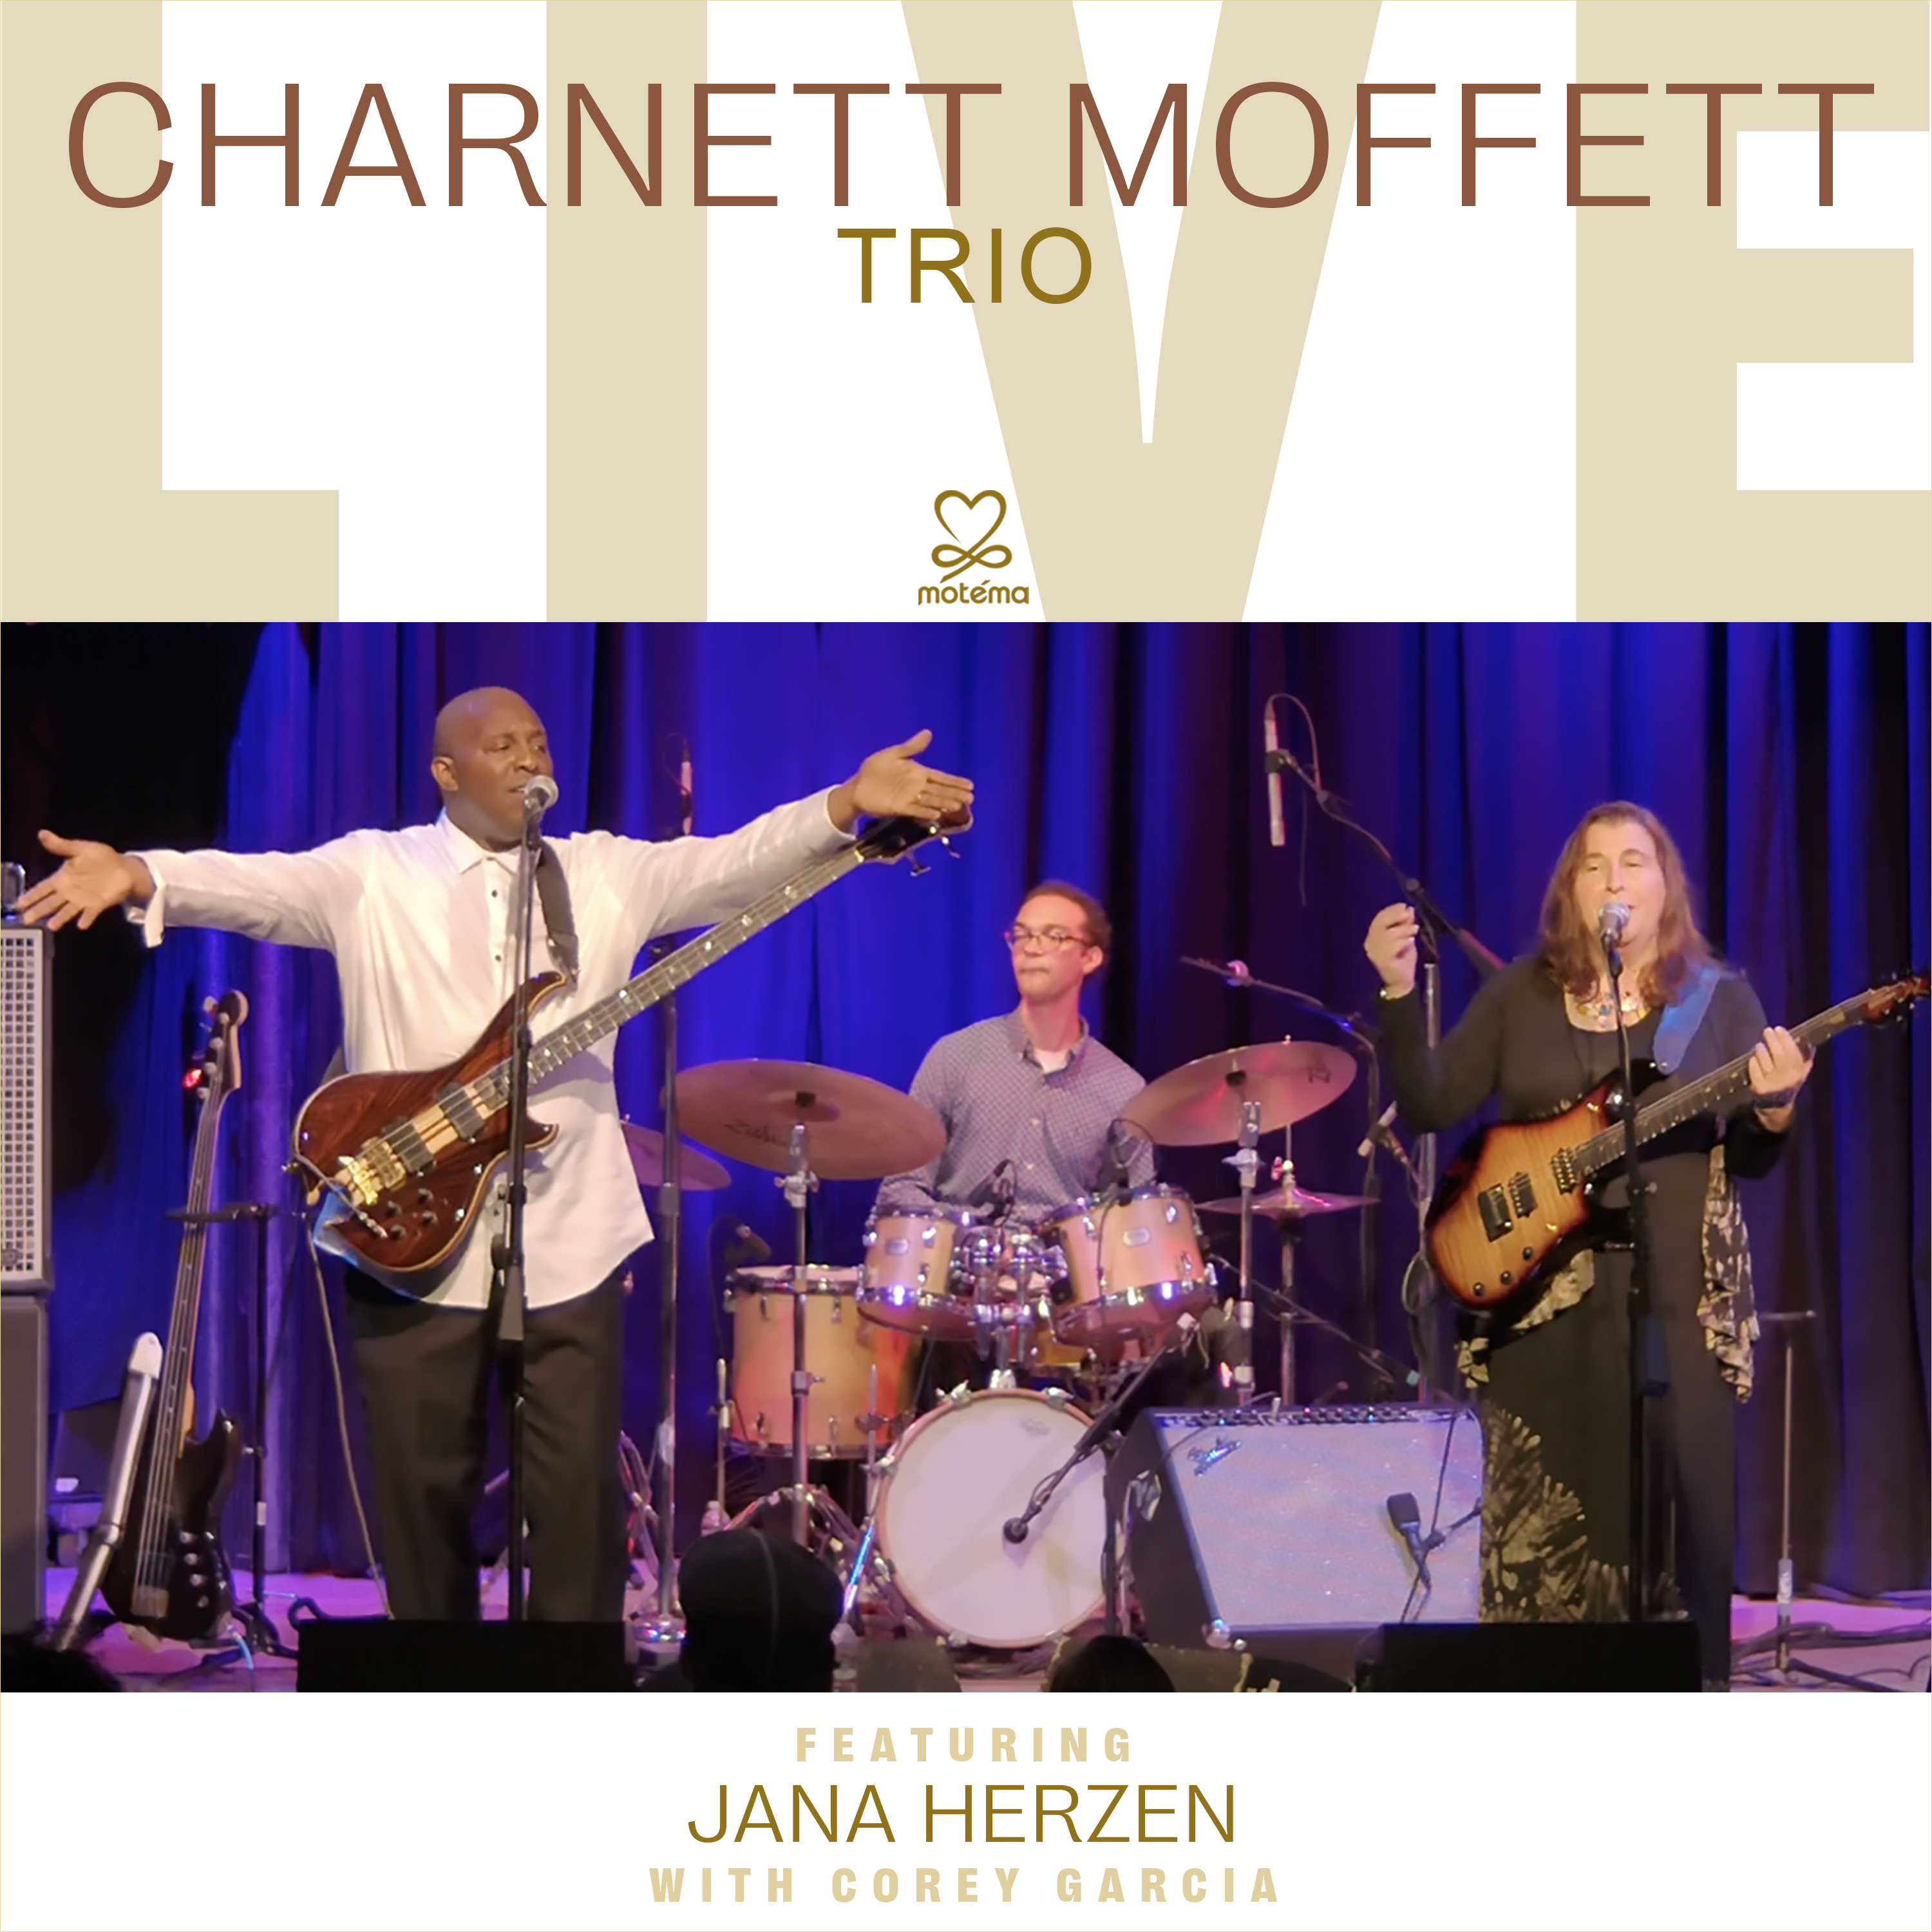 Charnett Moffett Trio LIVE feat. Jana Herzen